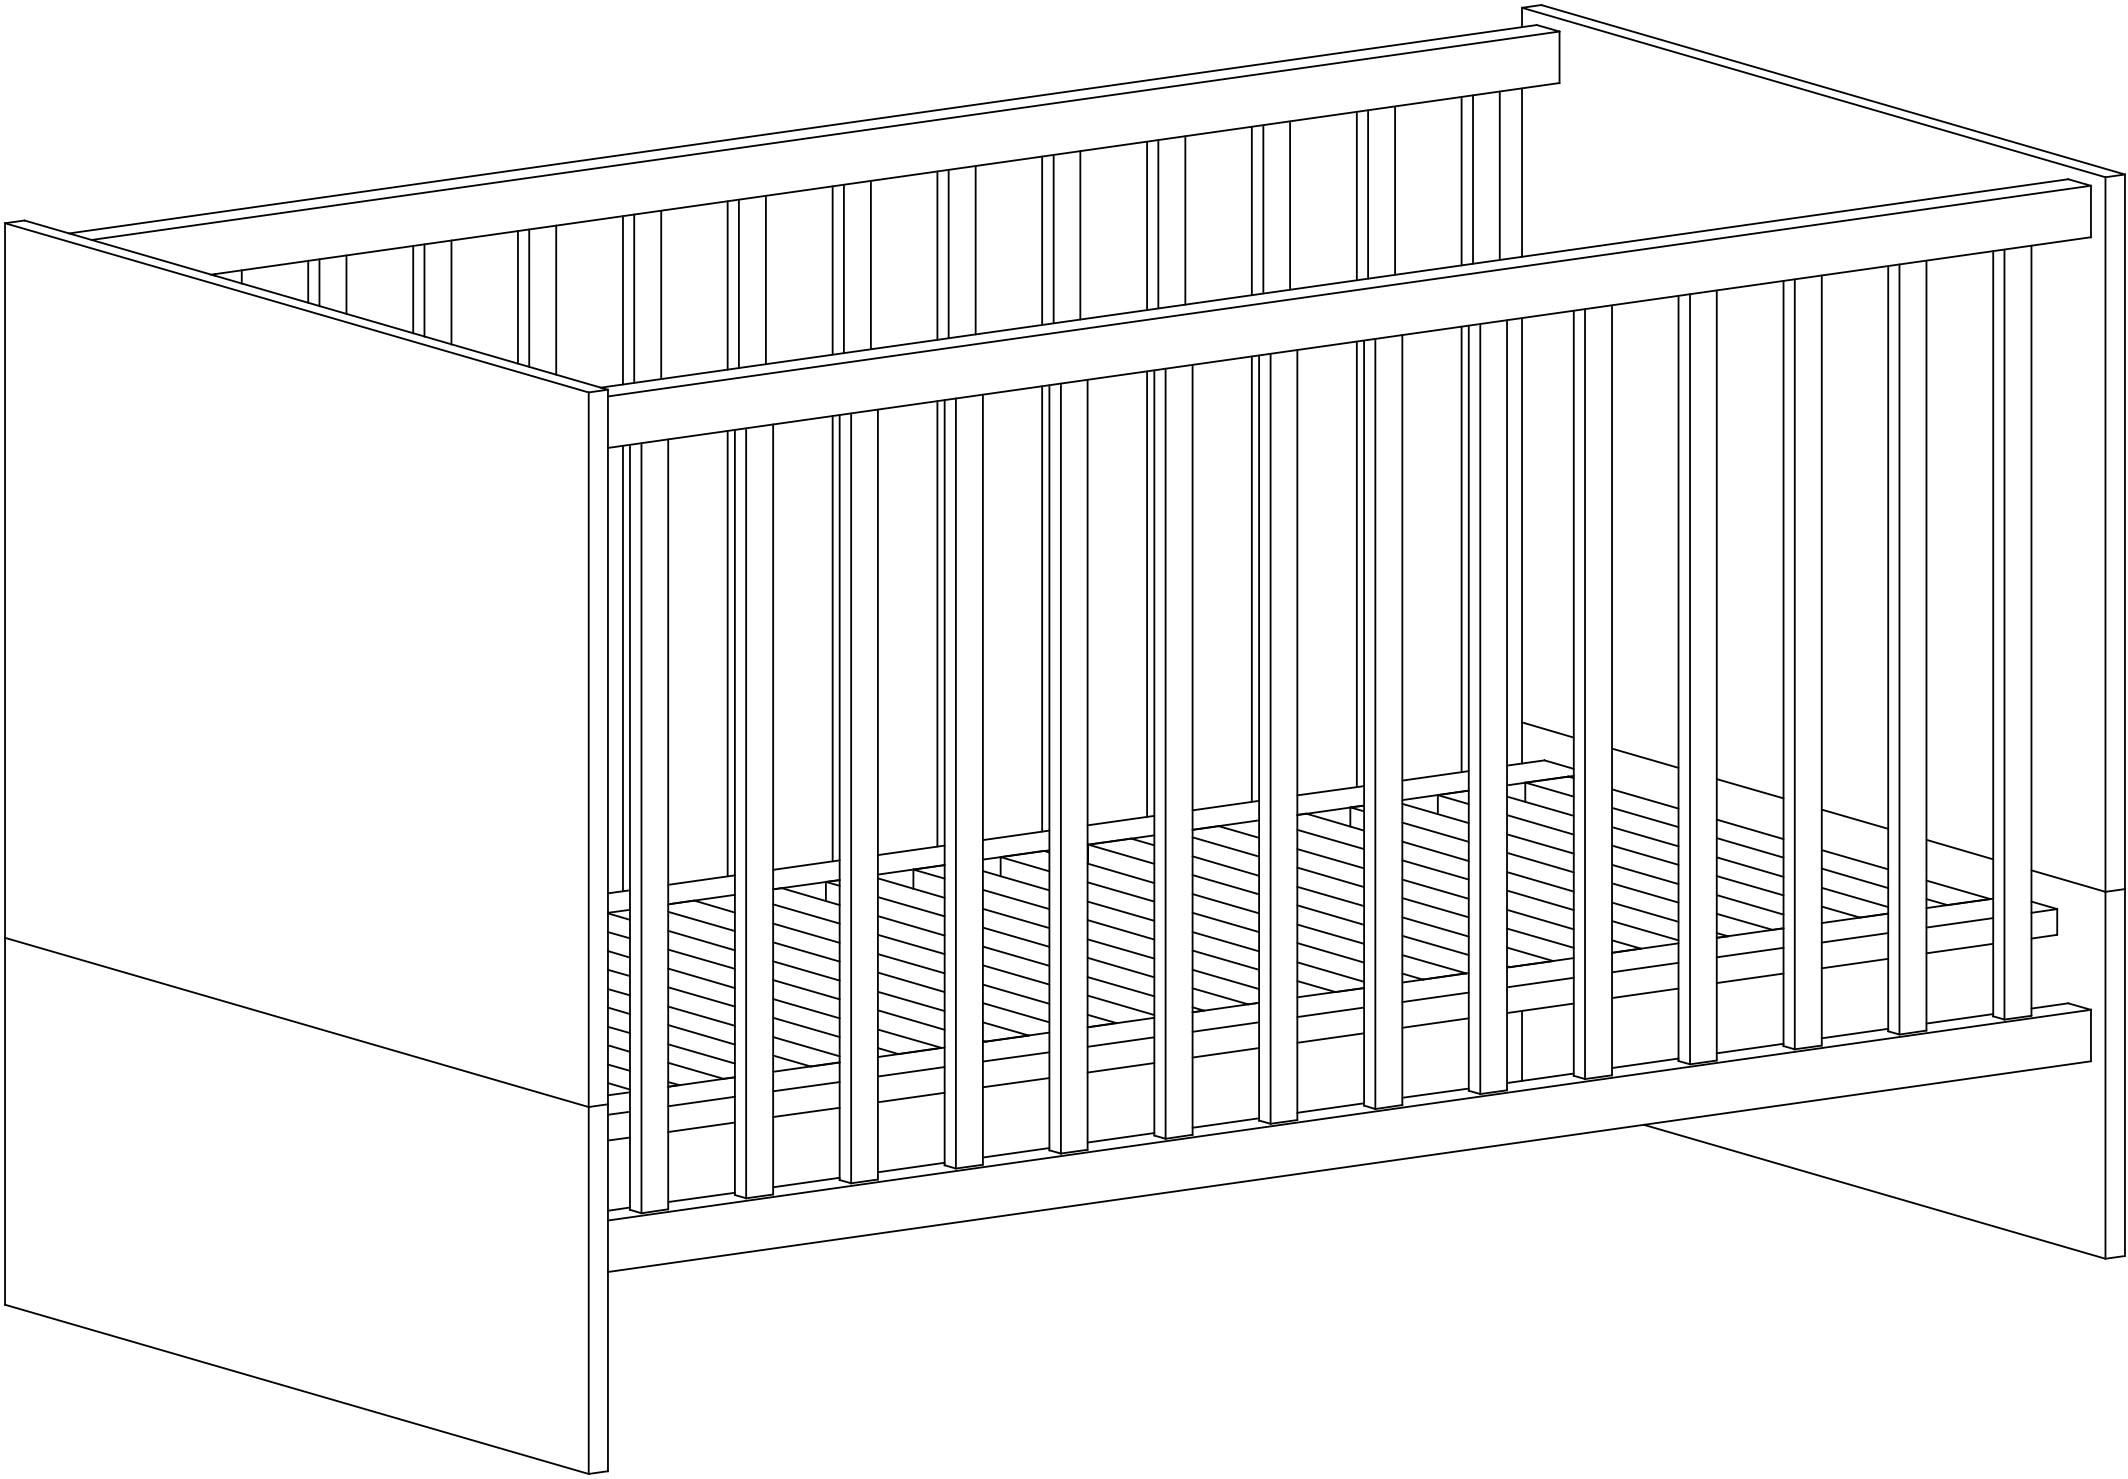 arthur berndt Babymöbel-Set »Selina«, (Spar-Set, 2 St., Kinderbett, Wickelkommode), Made in Germany; bestehend aus Kinderbett und Wickelkommode